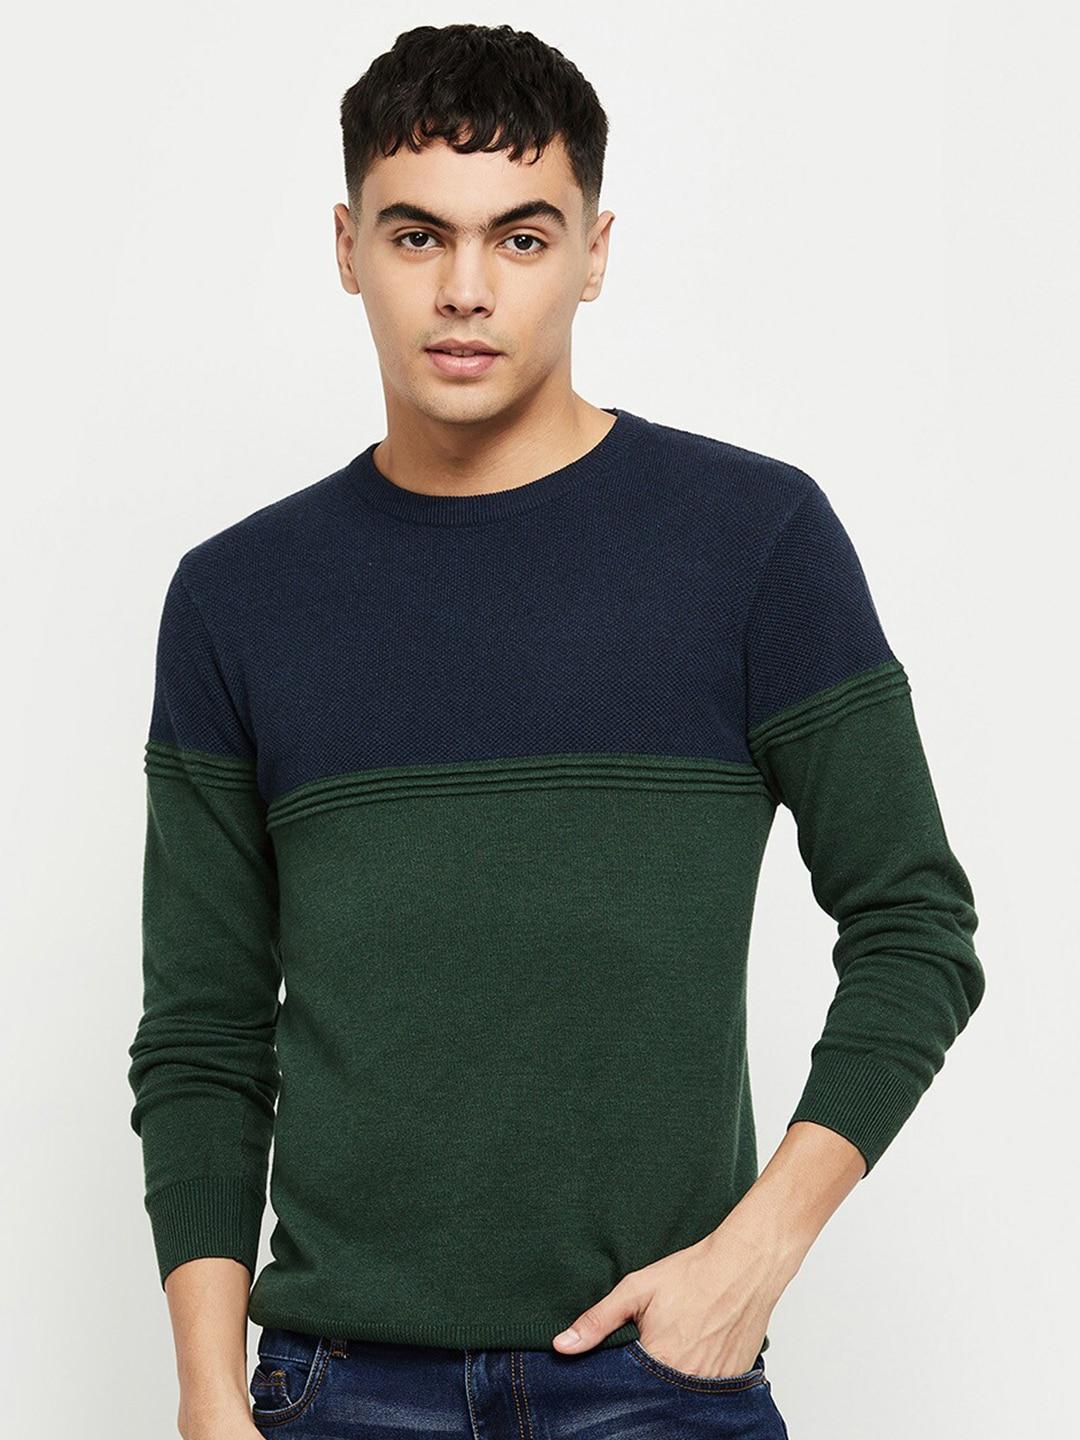 max-men-blue-colourblocked-cotton-sweatshirt